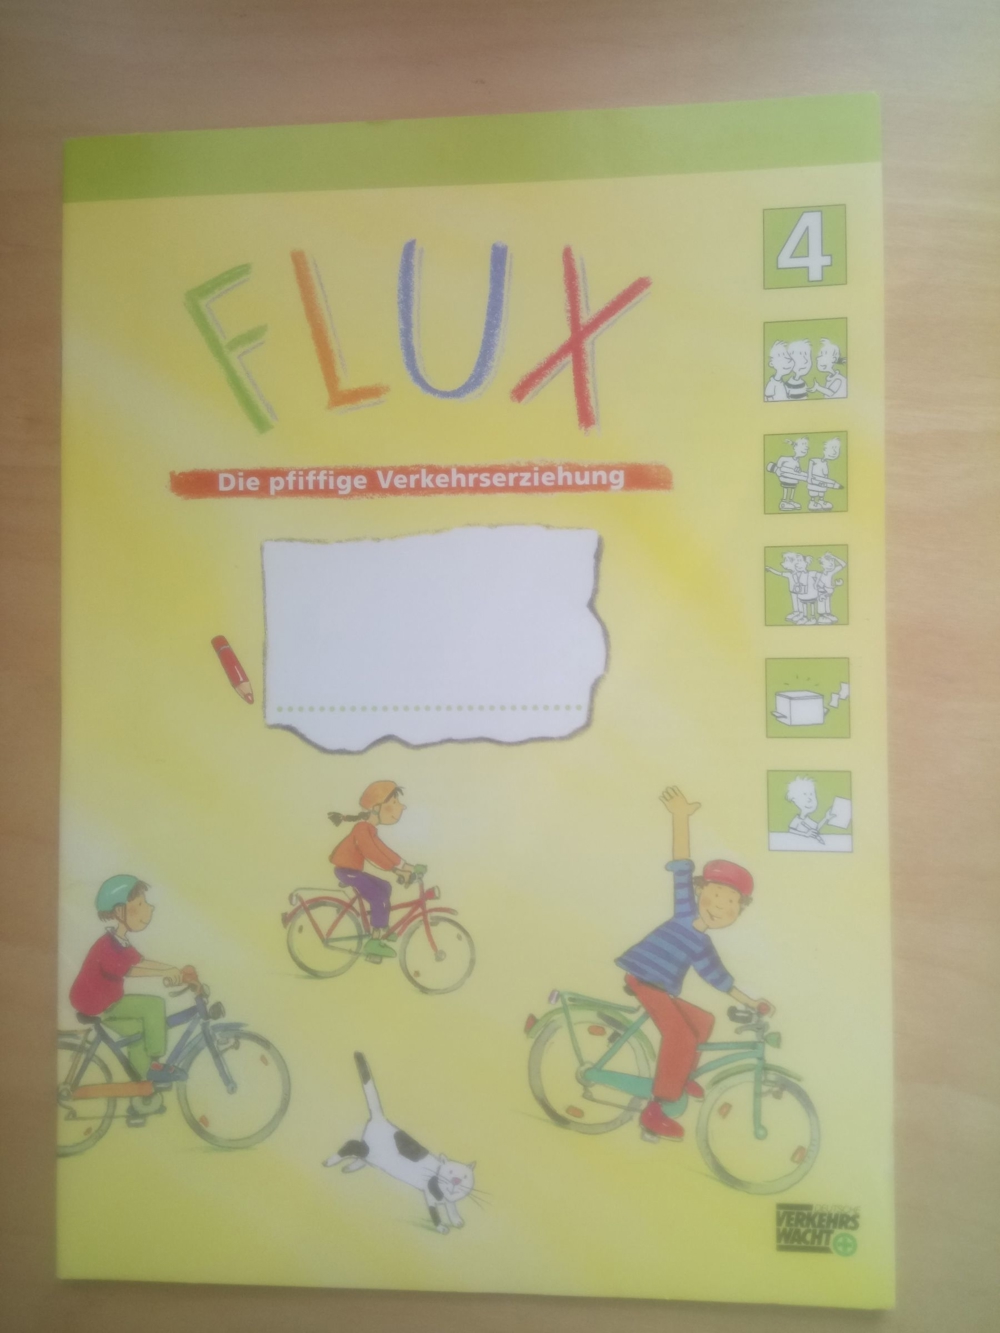 Flux - Die pfiffige Verkehrserziehung (4)